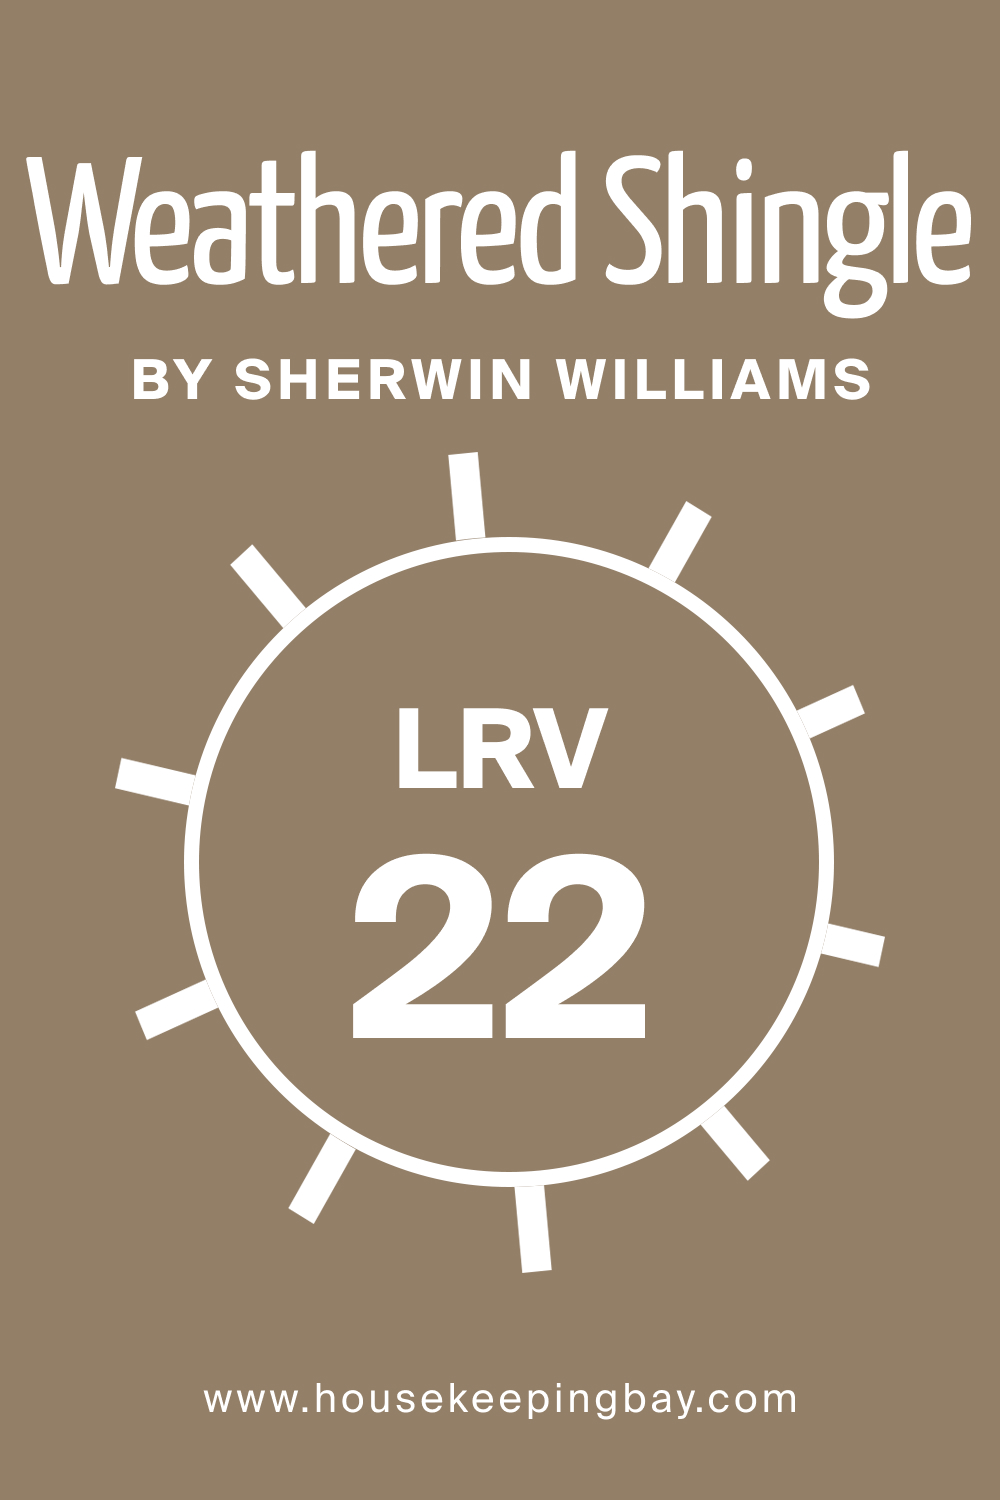 SW 2841 Weathered Shingle by Sherwin Williams. LRV 22